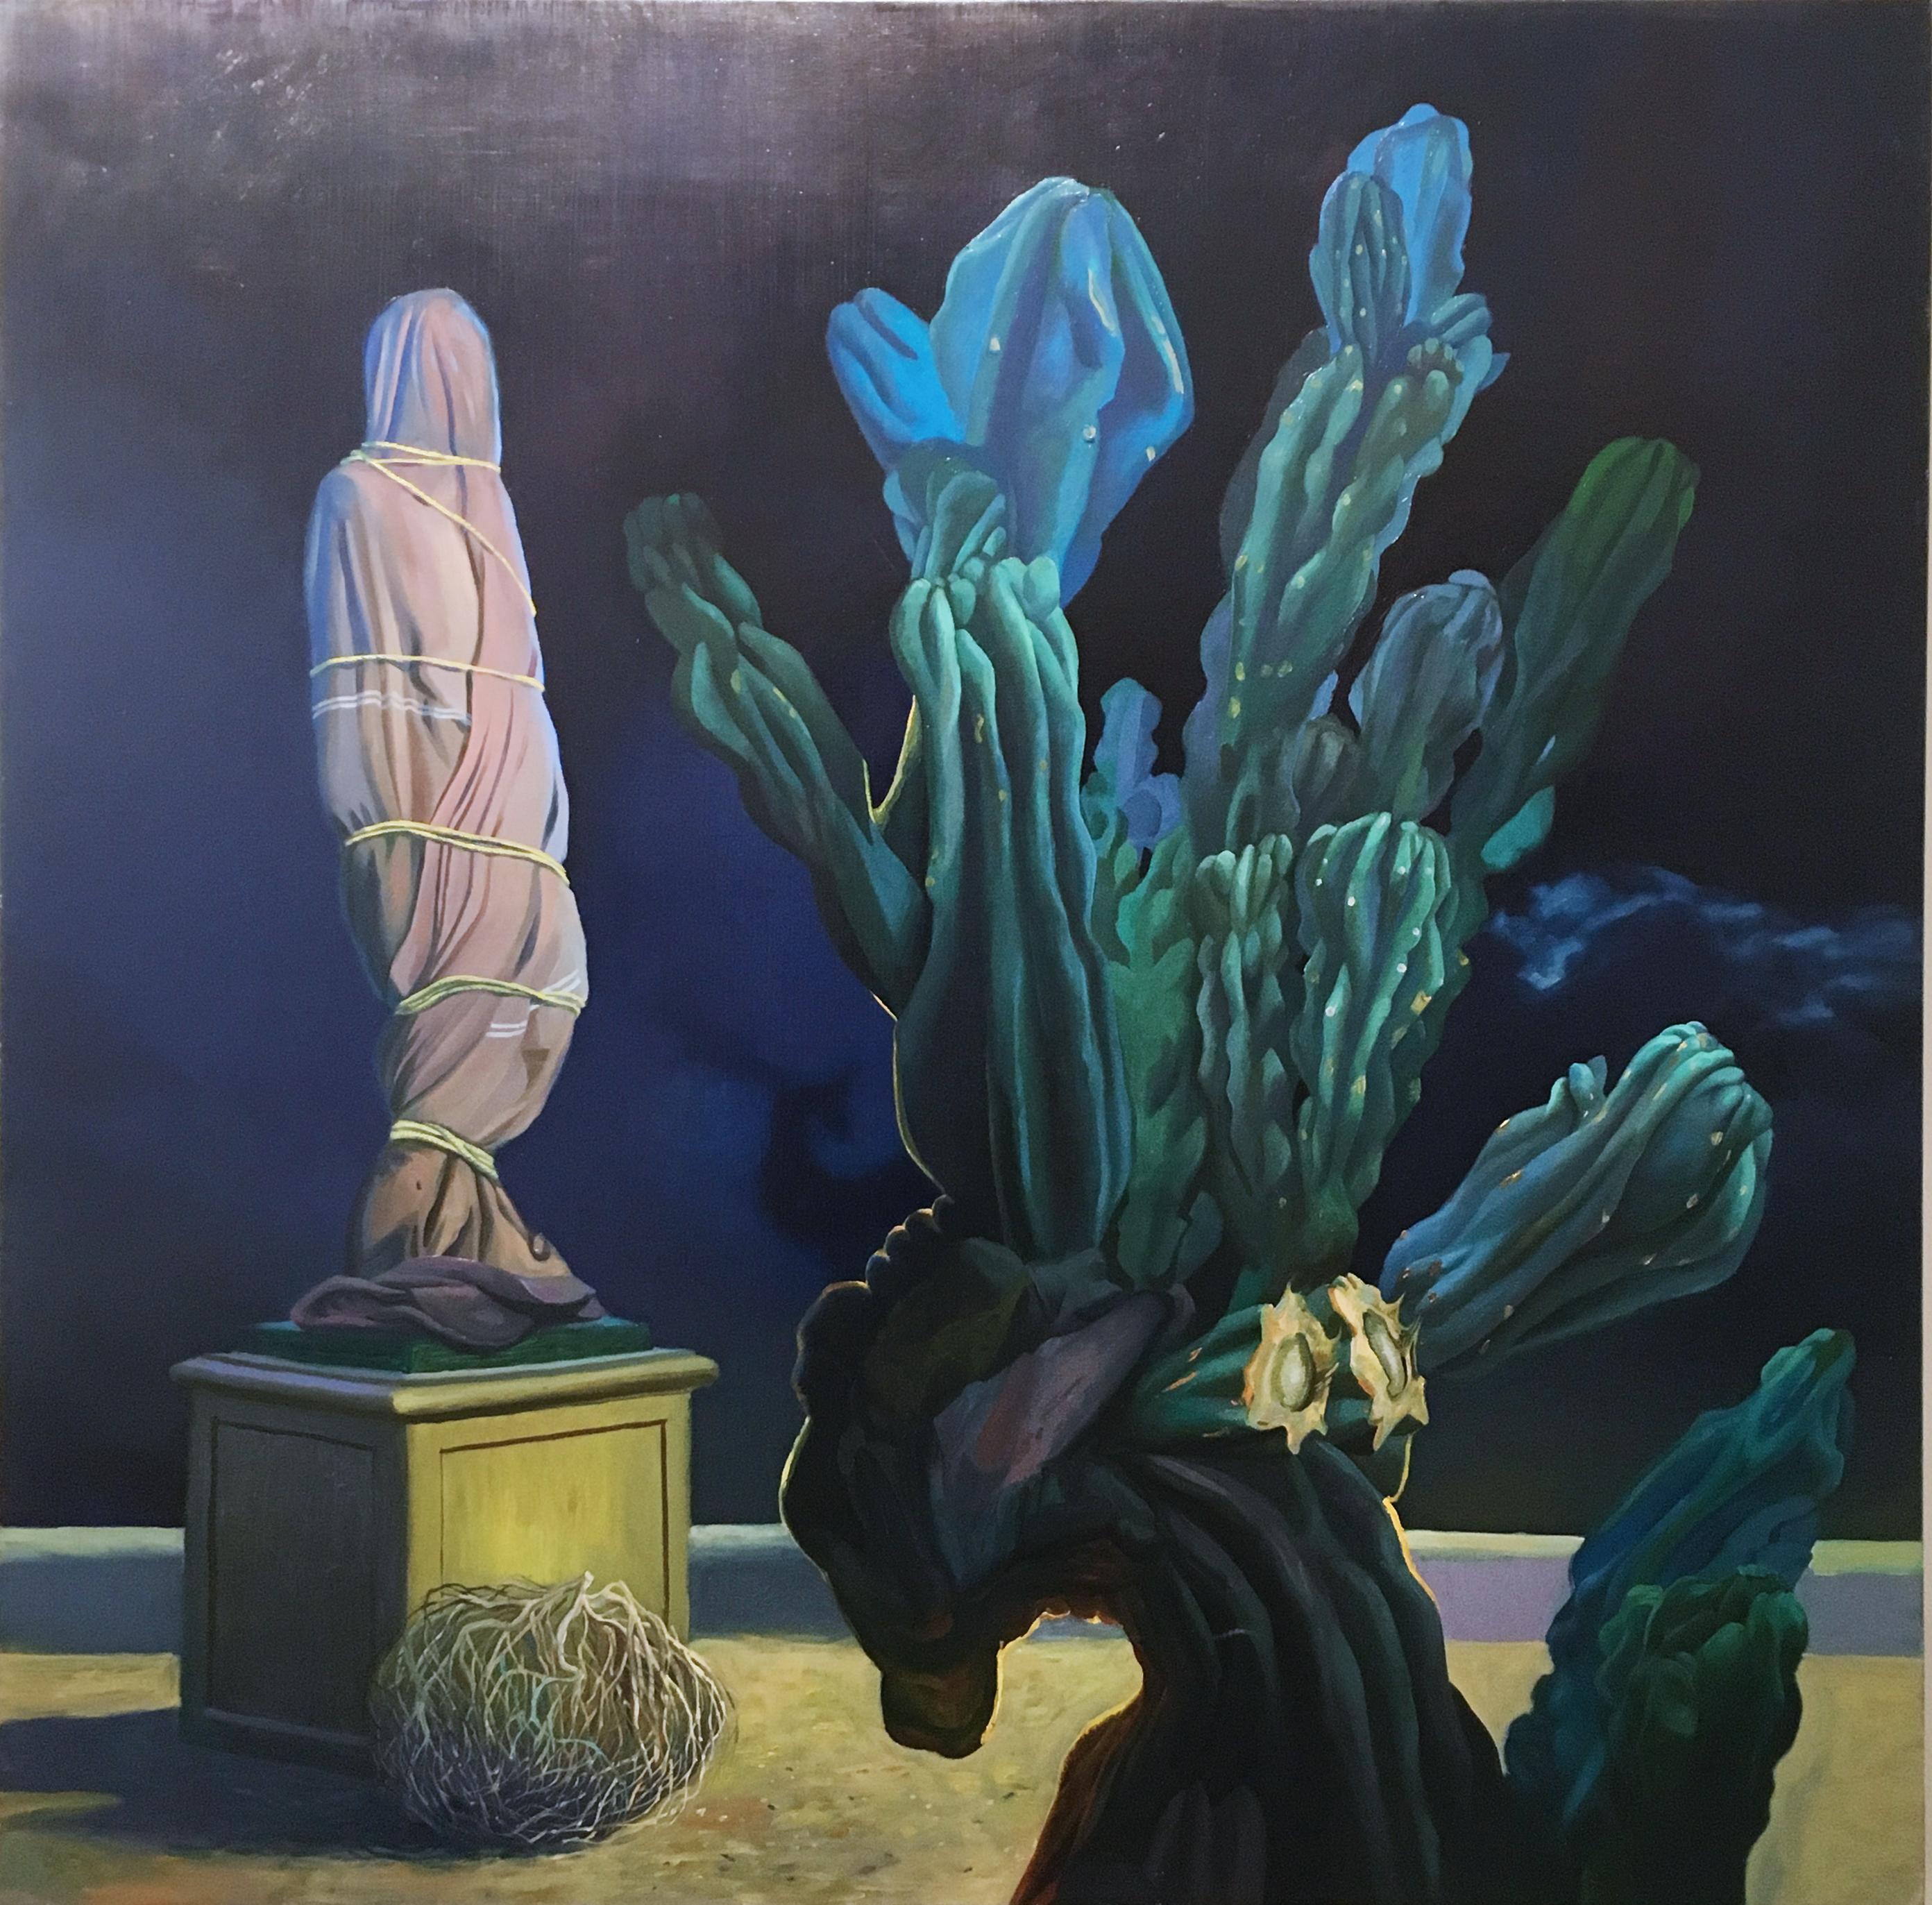 Thomas John Carlson Figurative Painting – Statue, surrealistisch, figurativ, Landschaft, Öl auf Leinen, 2019